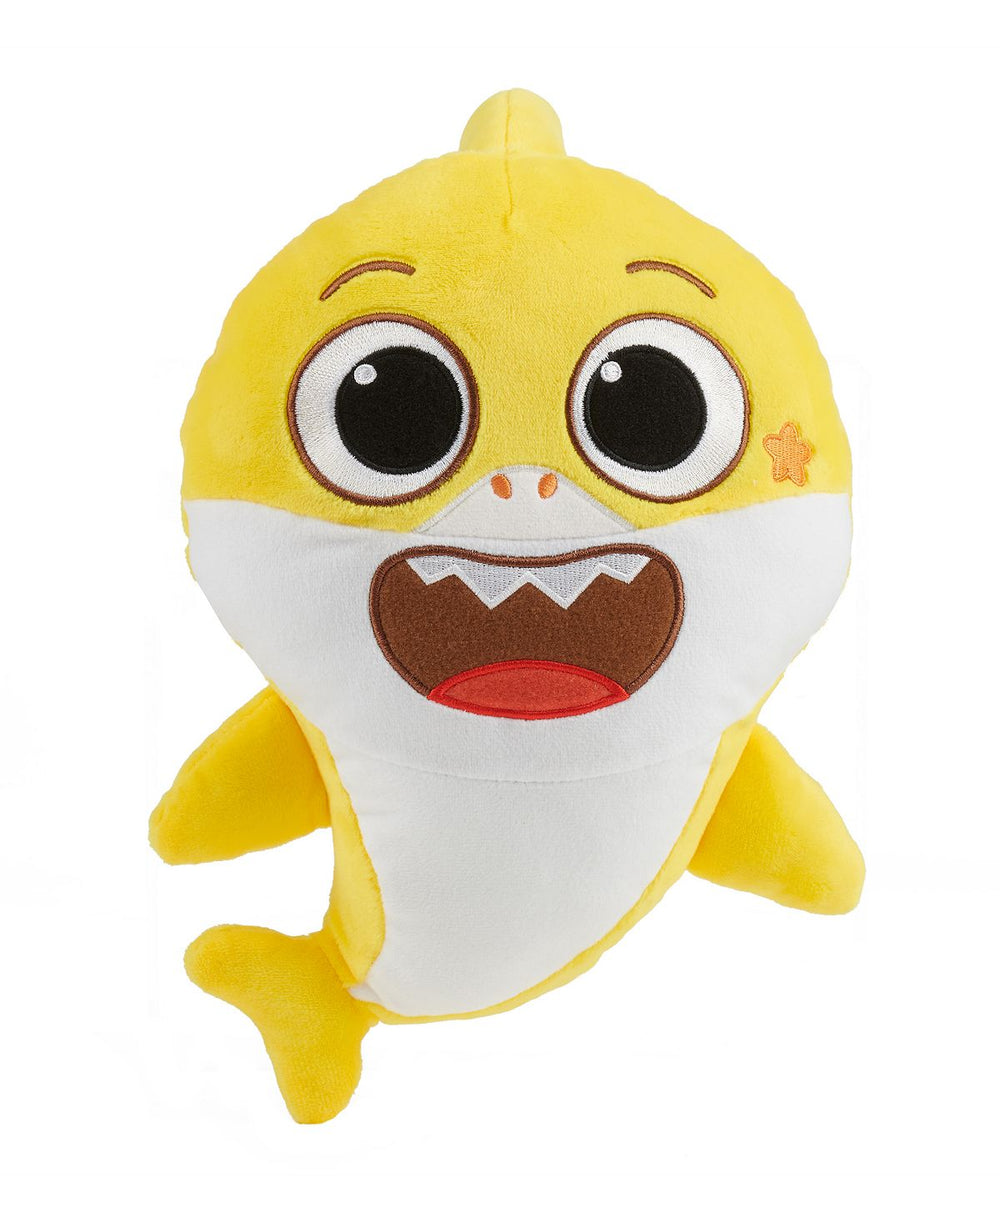 Nickelodeon Baby Shark 12 inch Fin Friend Plush Toy